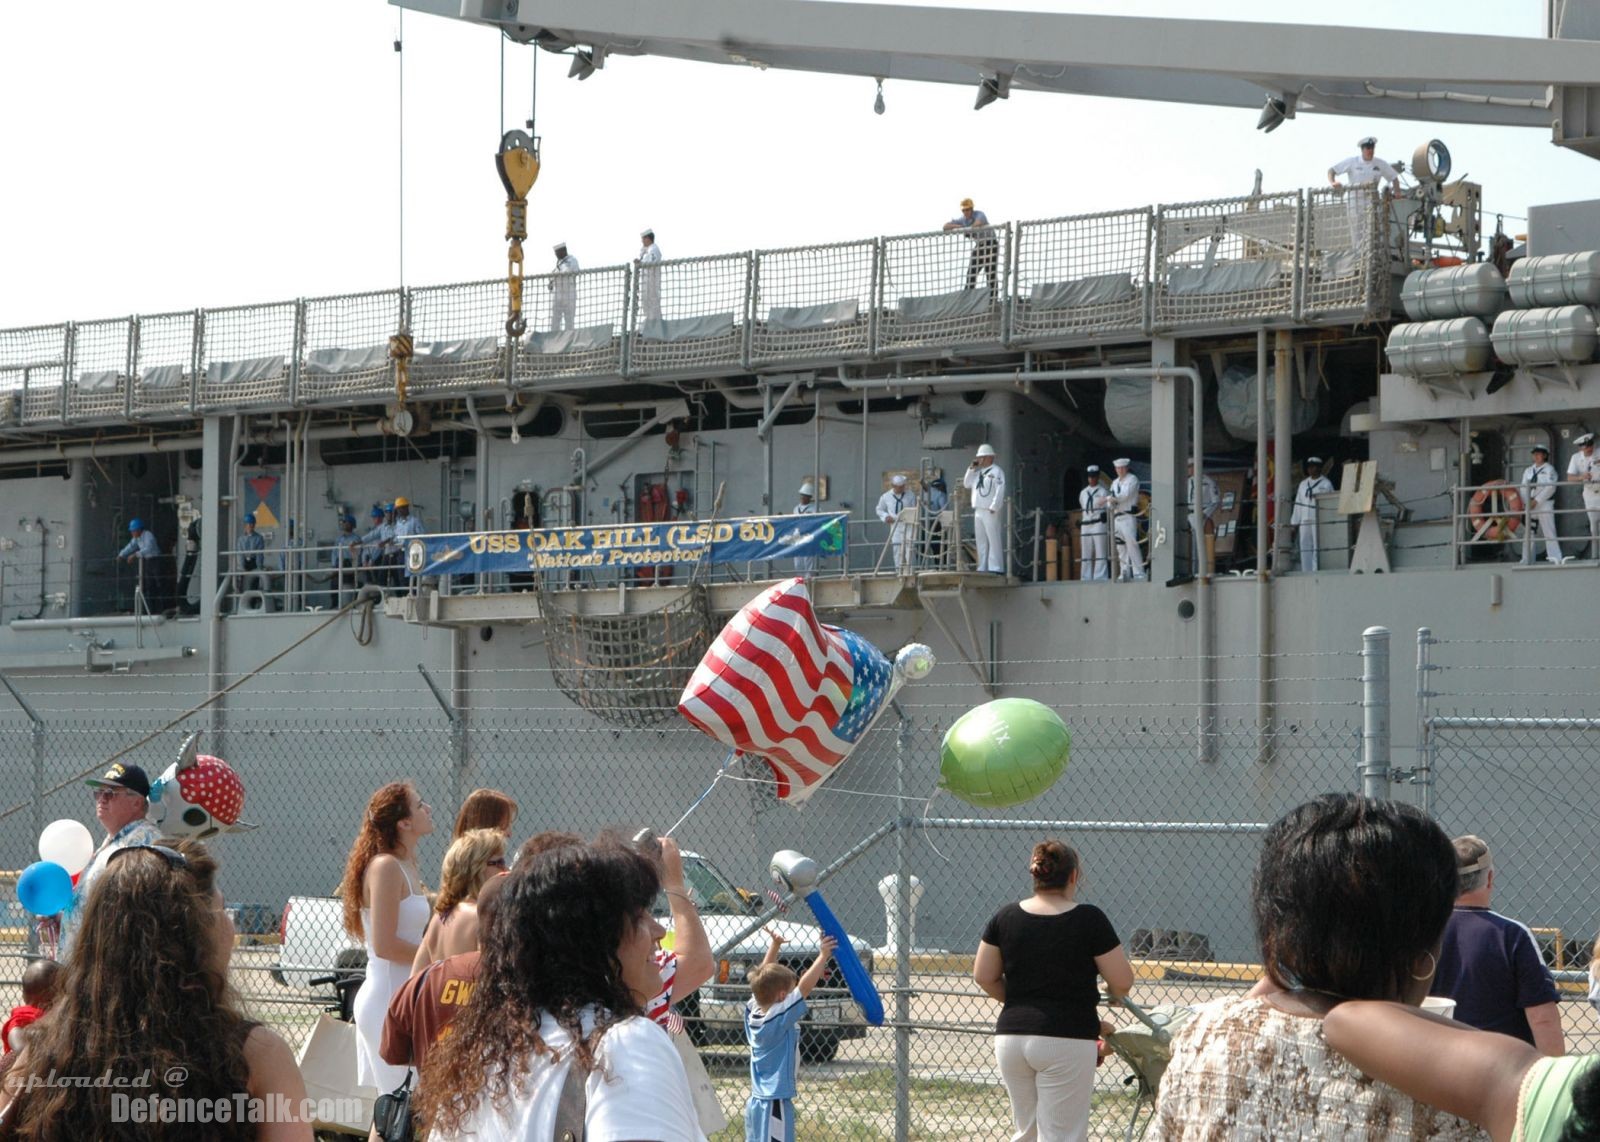 amphibious dock landing ship USS Oak Hill (LSD 51)